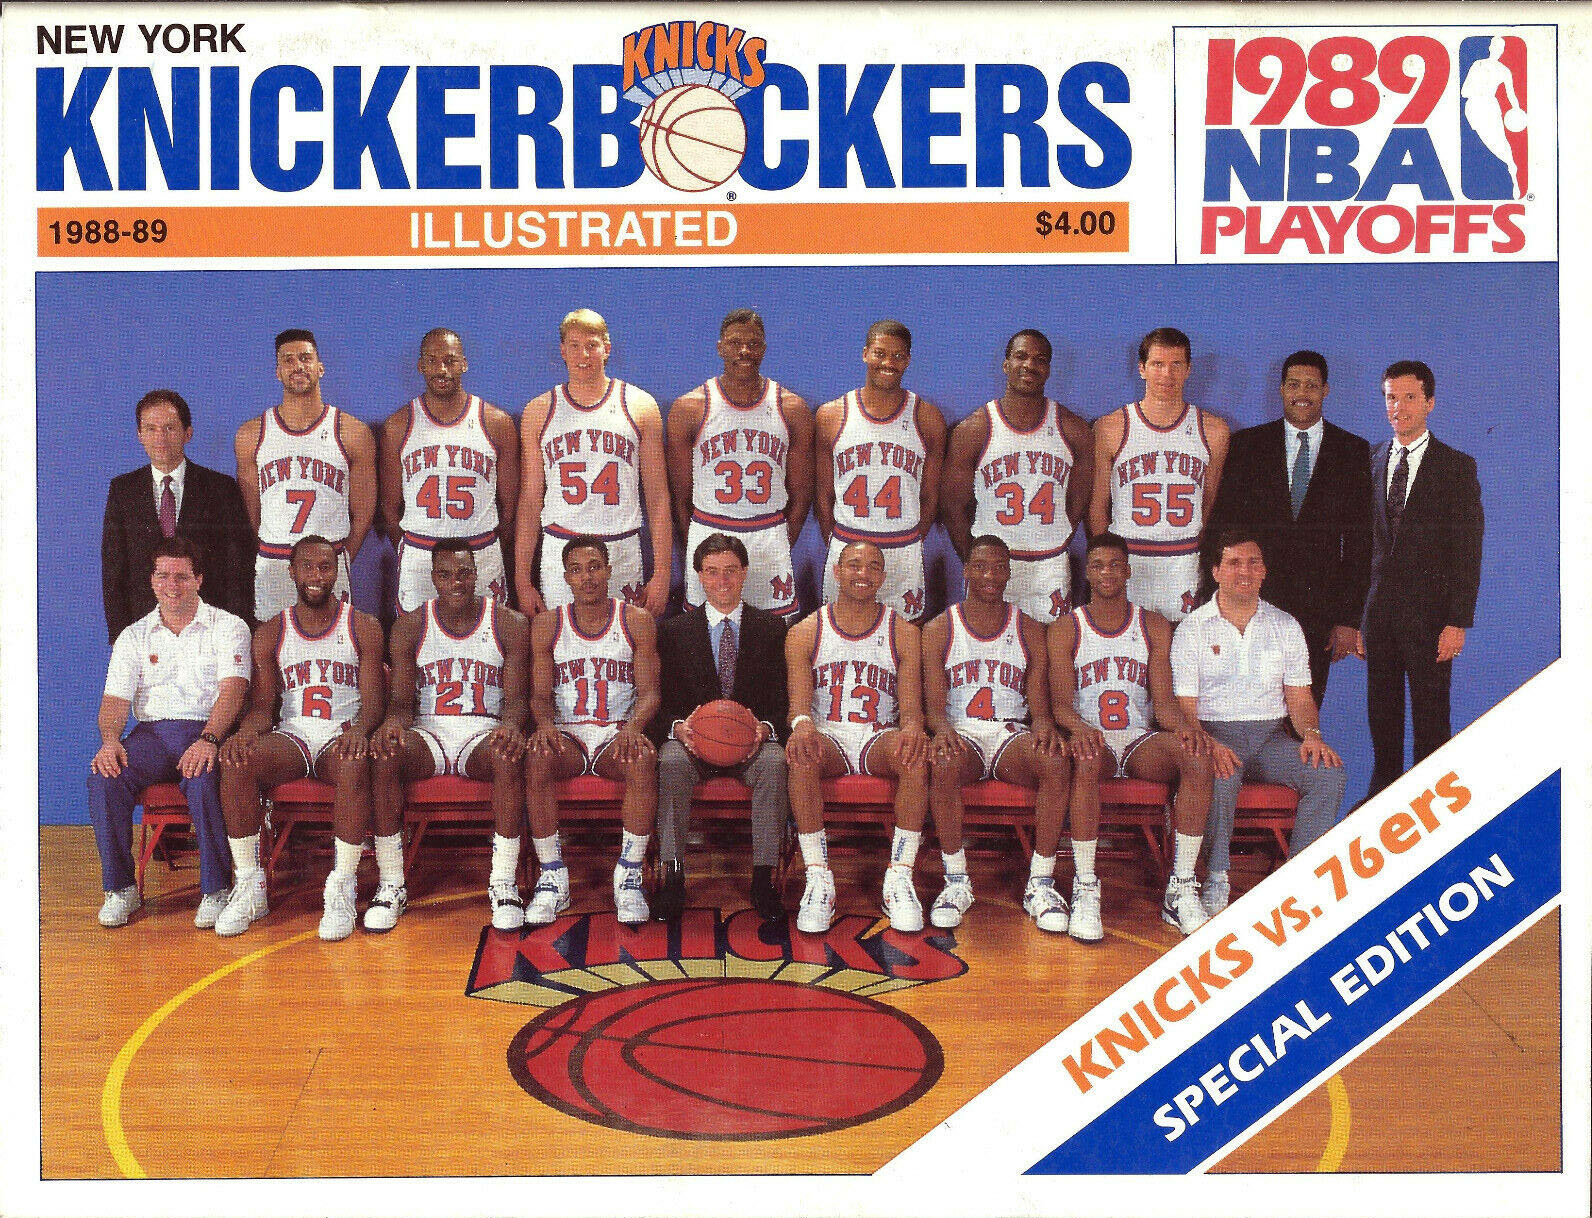 1988-89 New York Knicks playoff program (Philadelphia 76ers)